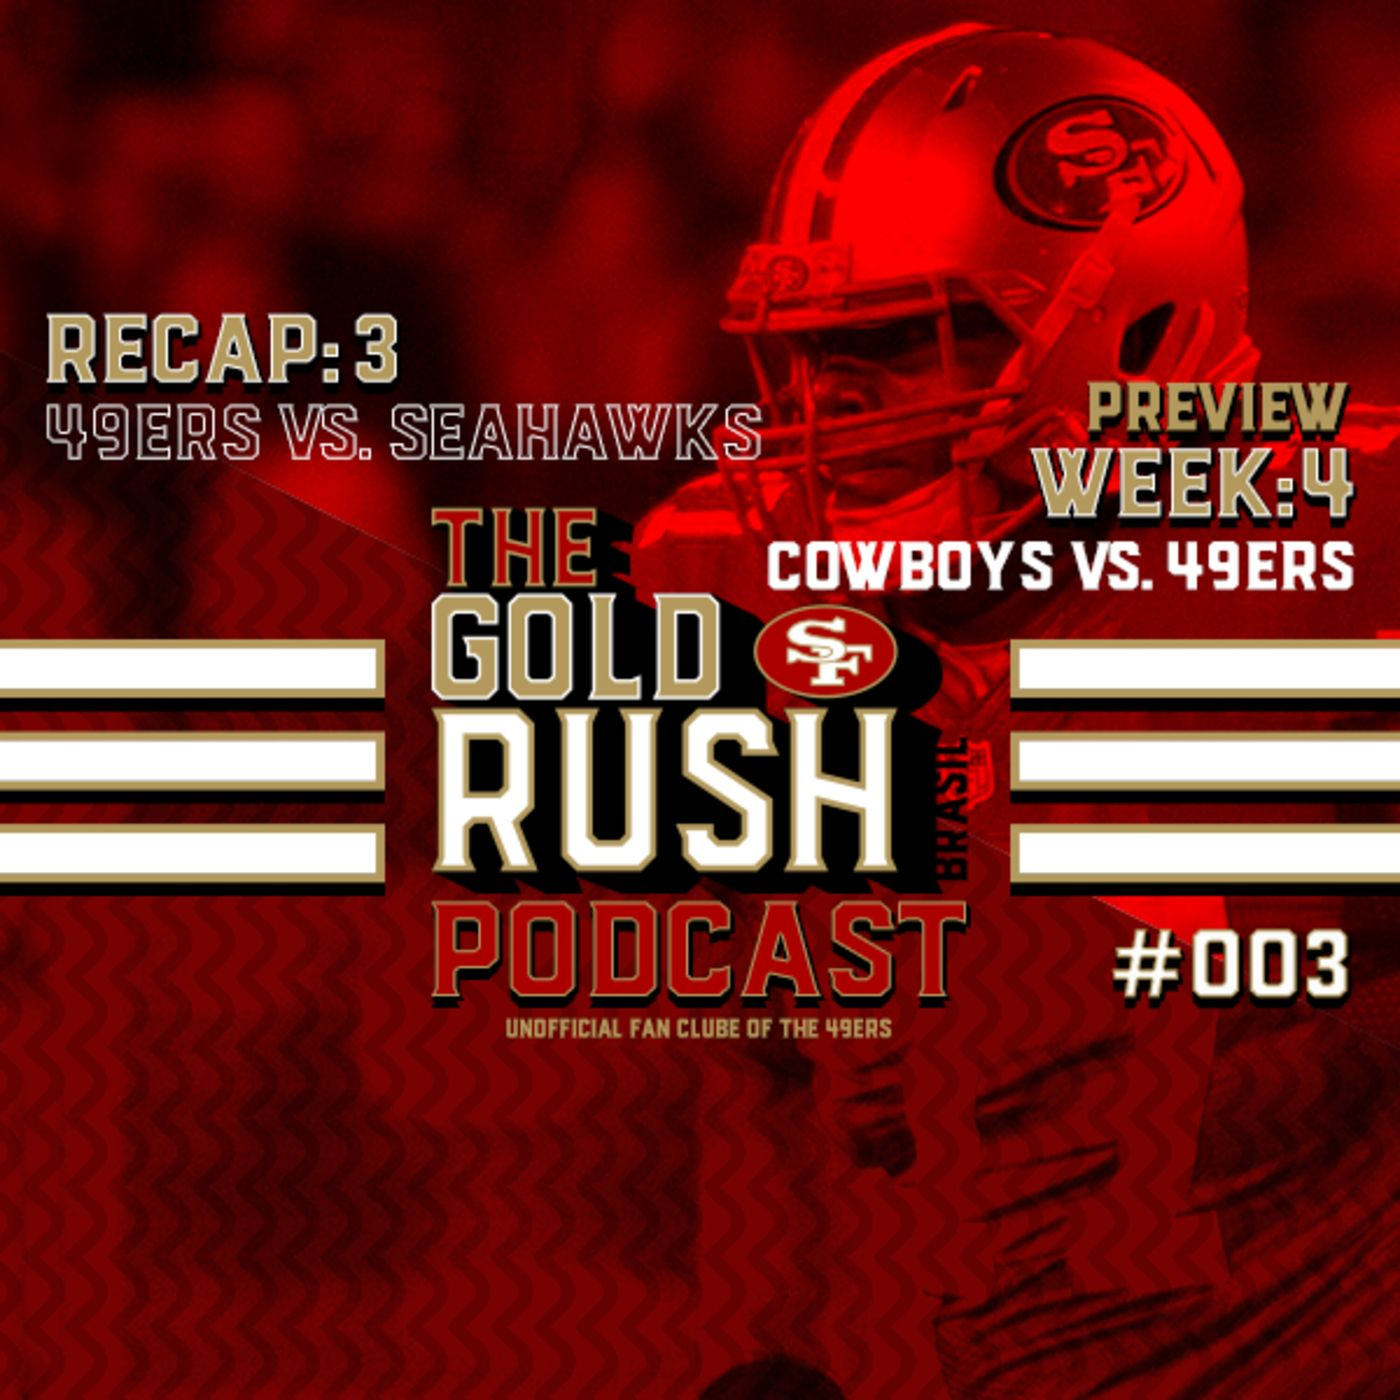 The Gold Rush Brasil 003 – Semana 3 49ers vs Seahawks